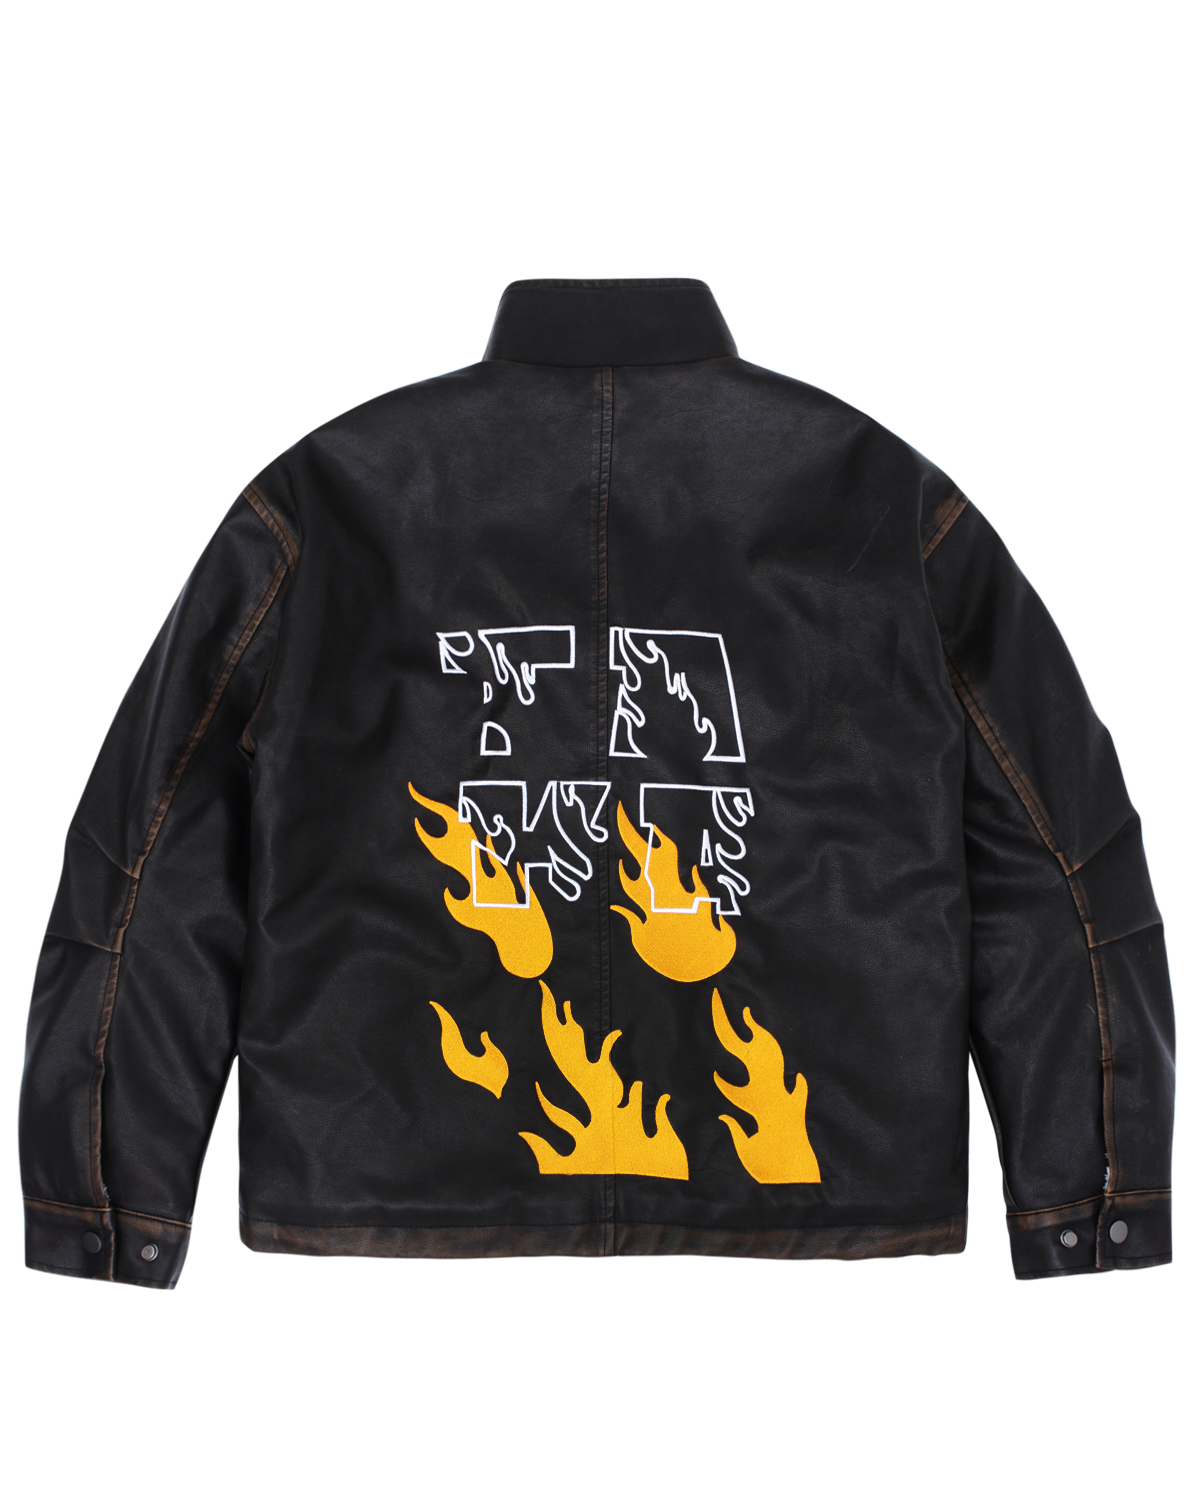 TAKA Original Faded flame Leather Jacket